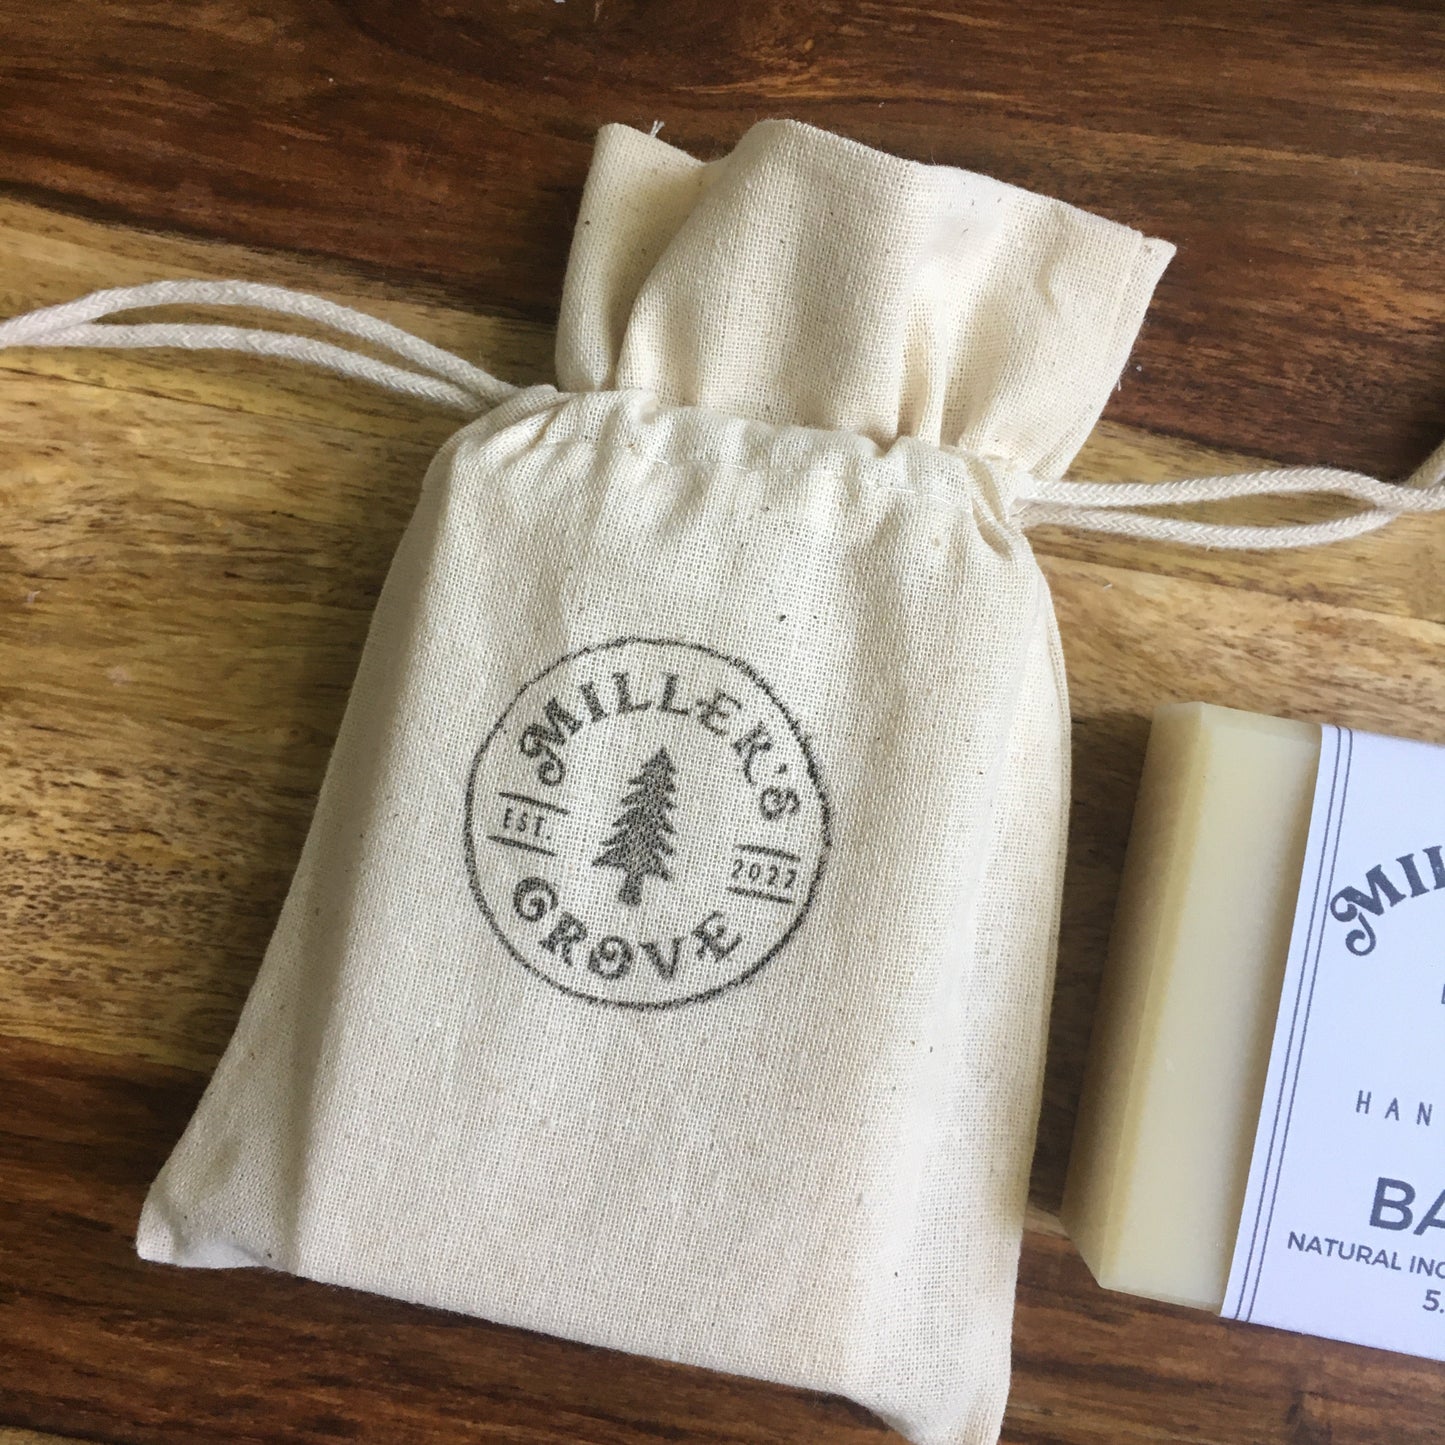 Cotton drawstring bag holding a bar of soap